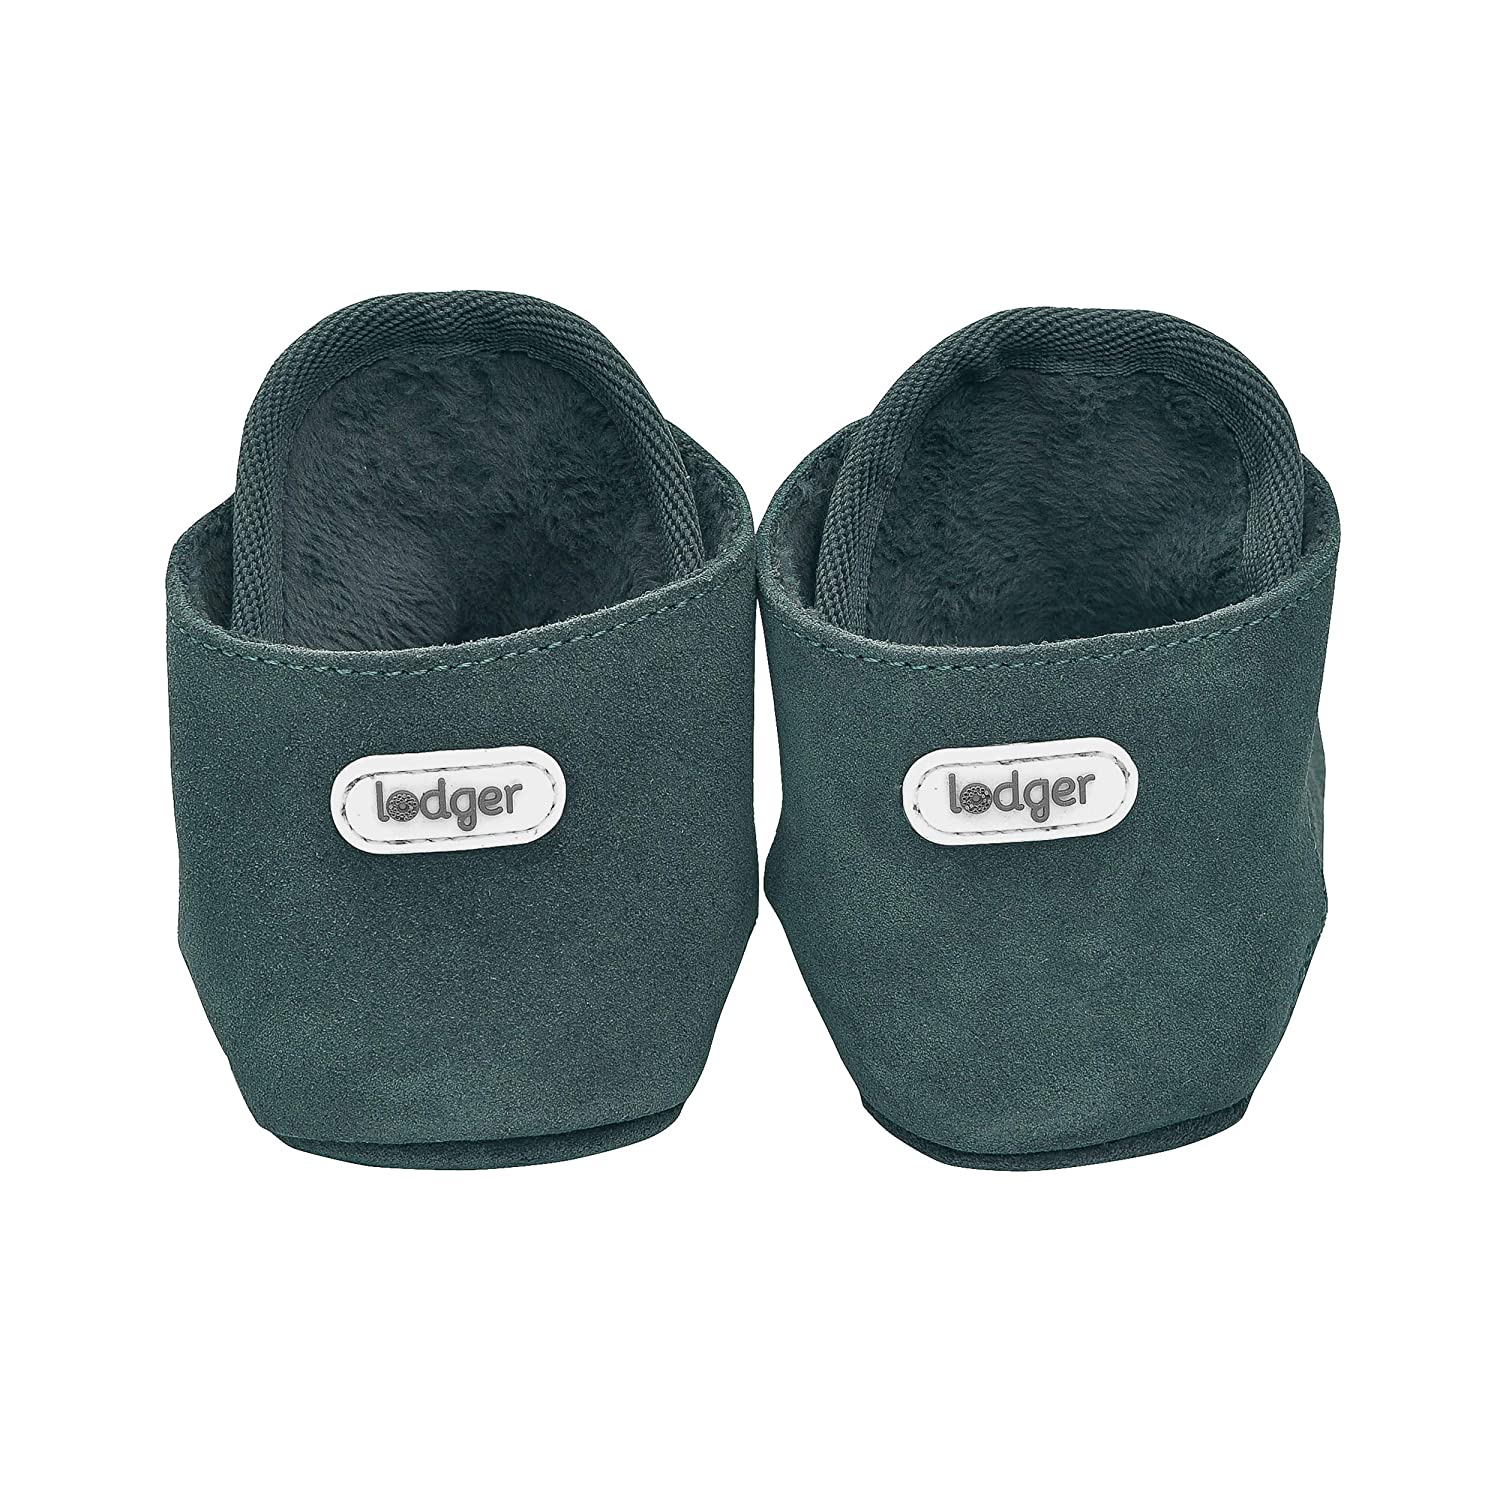 Lodger WKLE1001 Lodger Baby Shoes Walker Dark Green 15-18 Months Green